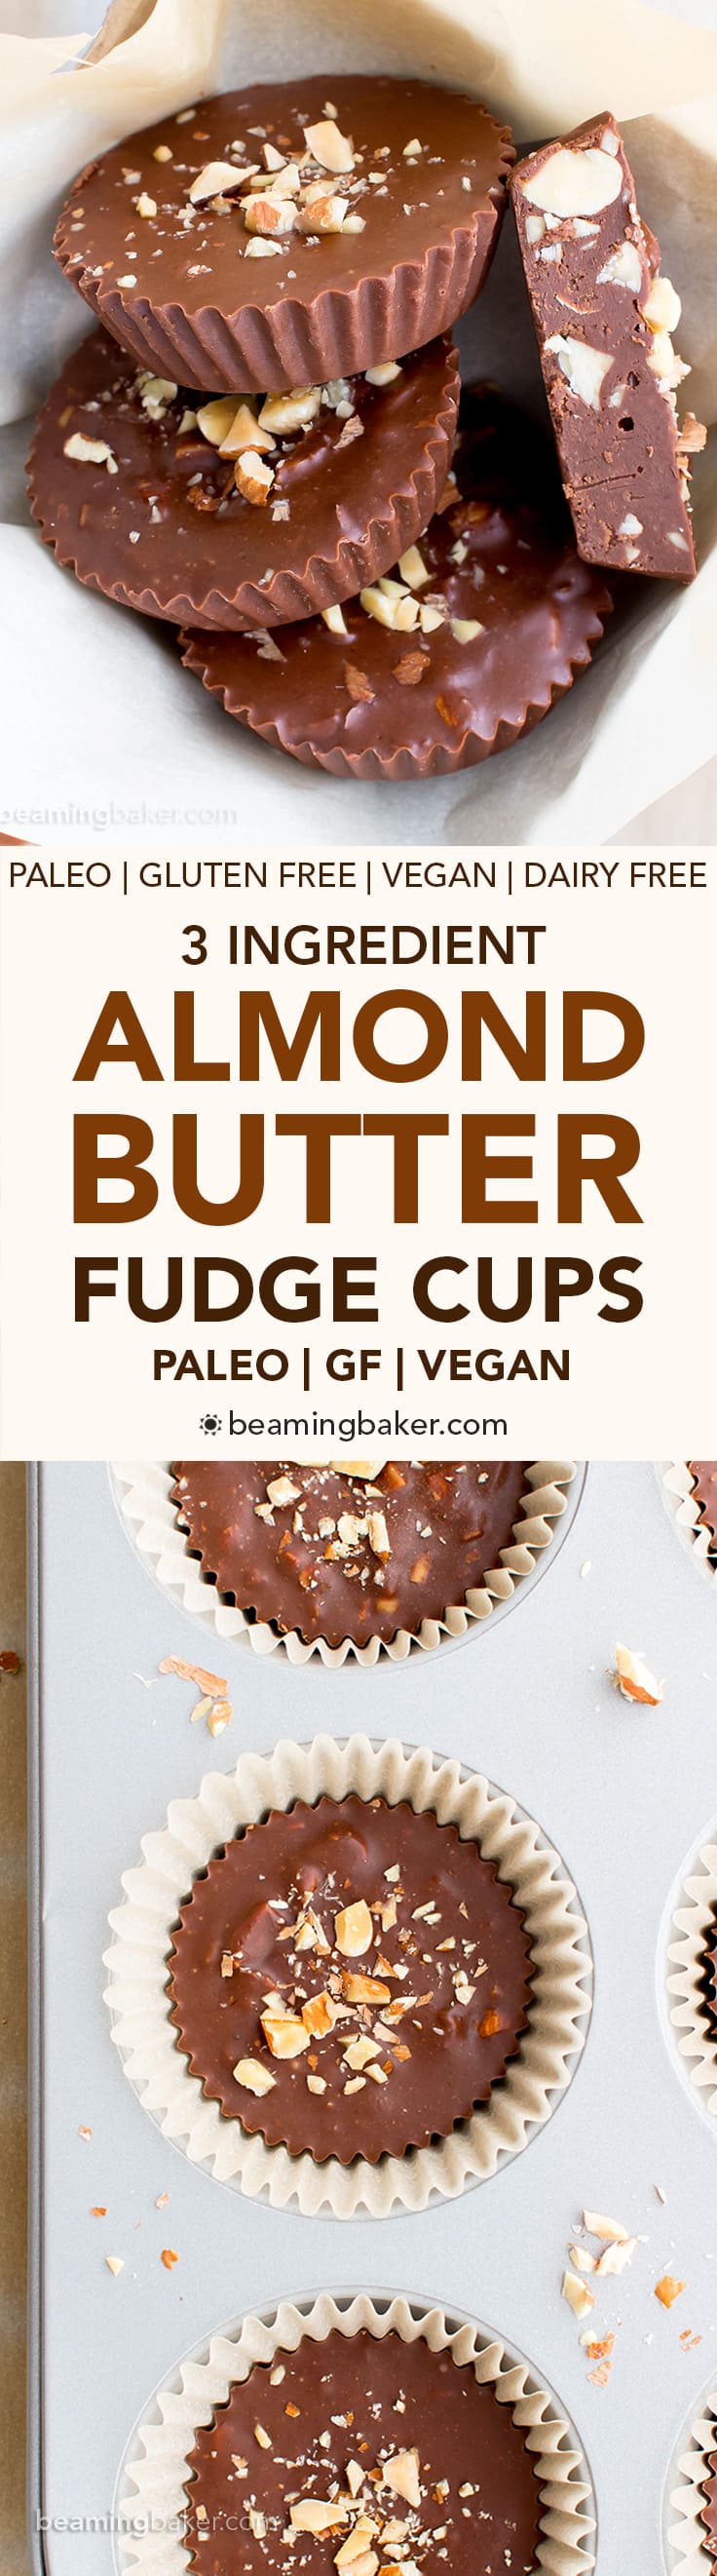 Paleo Chocolate Almond Butter Fudge Cups (V, GF, DF, Paleo): a 3-ingredient recipe for decadently rich almond butter fudge cups packed with almond crunch. #Paleo #Vegan #GlutenFree #DairyFree | BeamingBaker.com